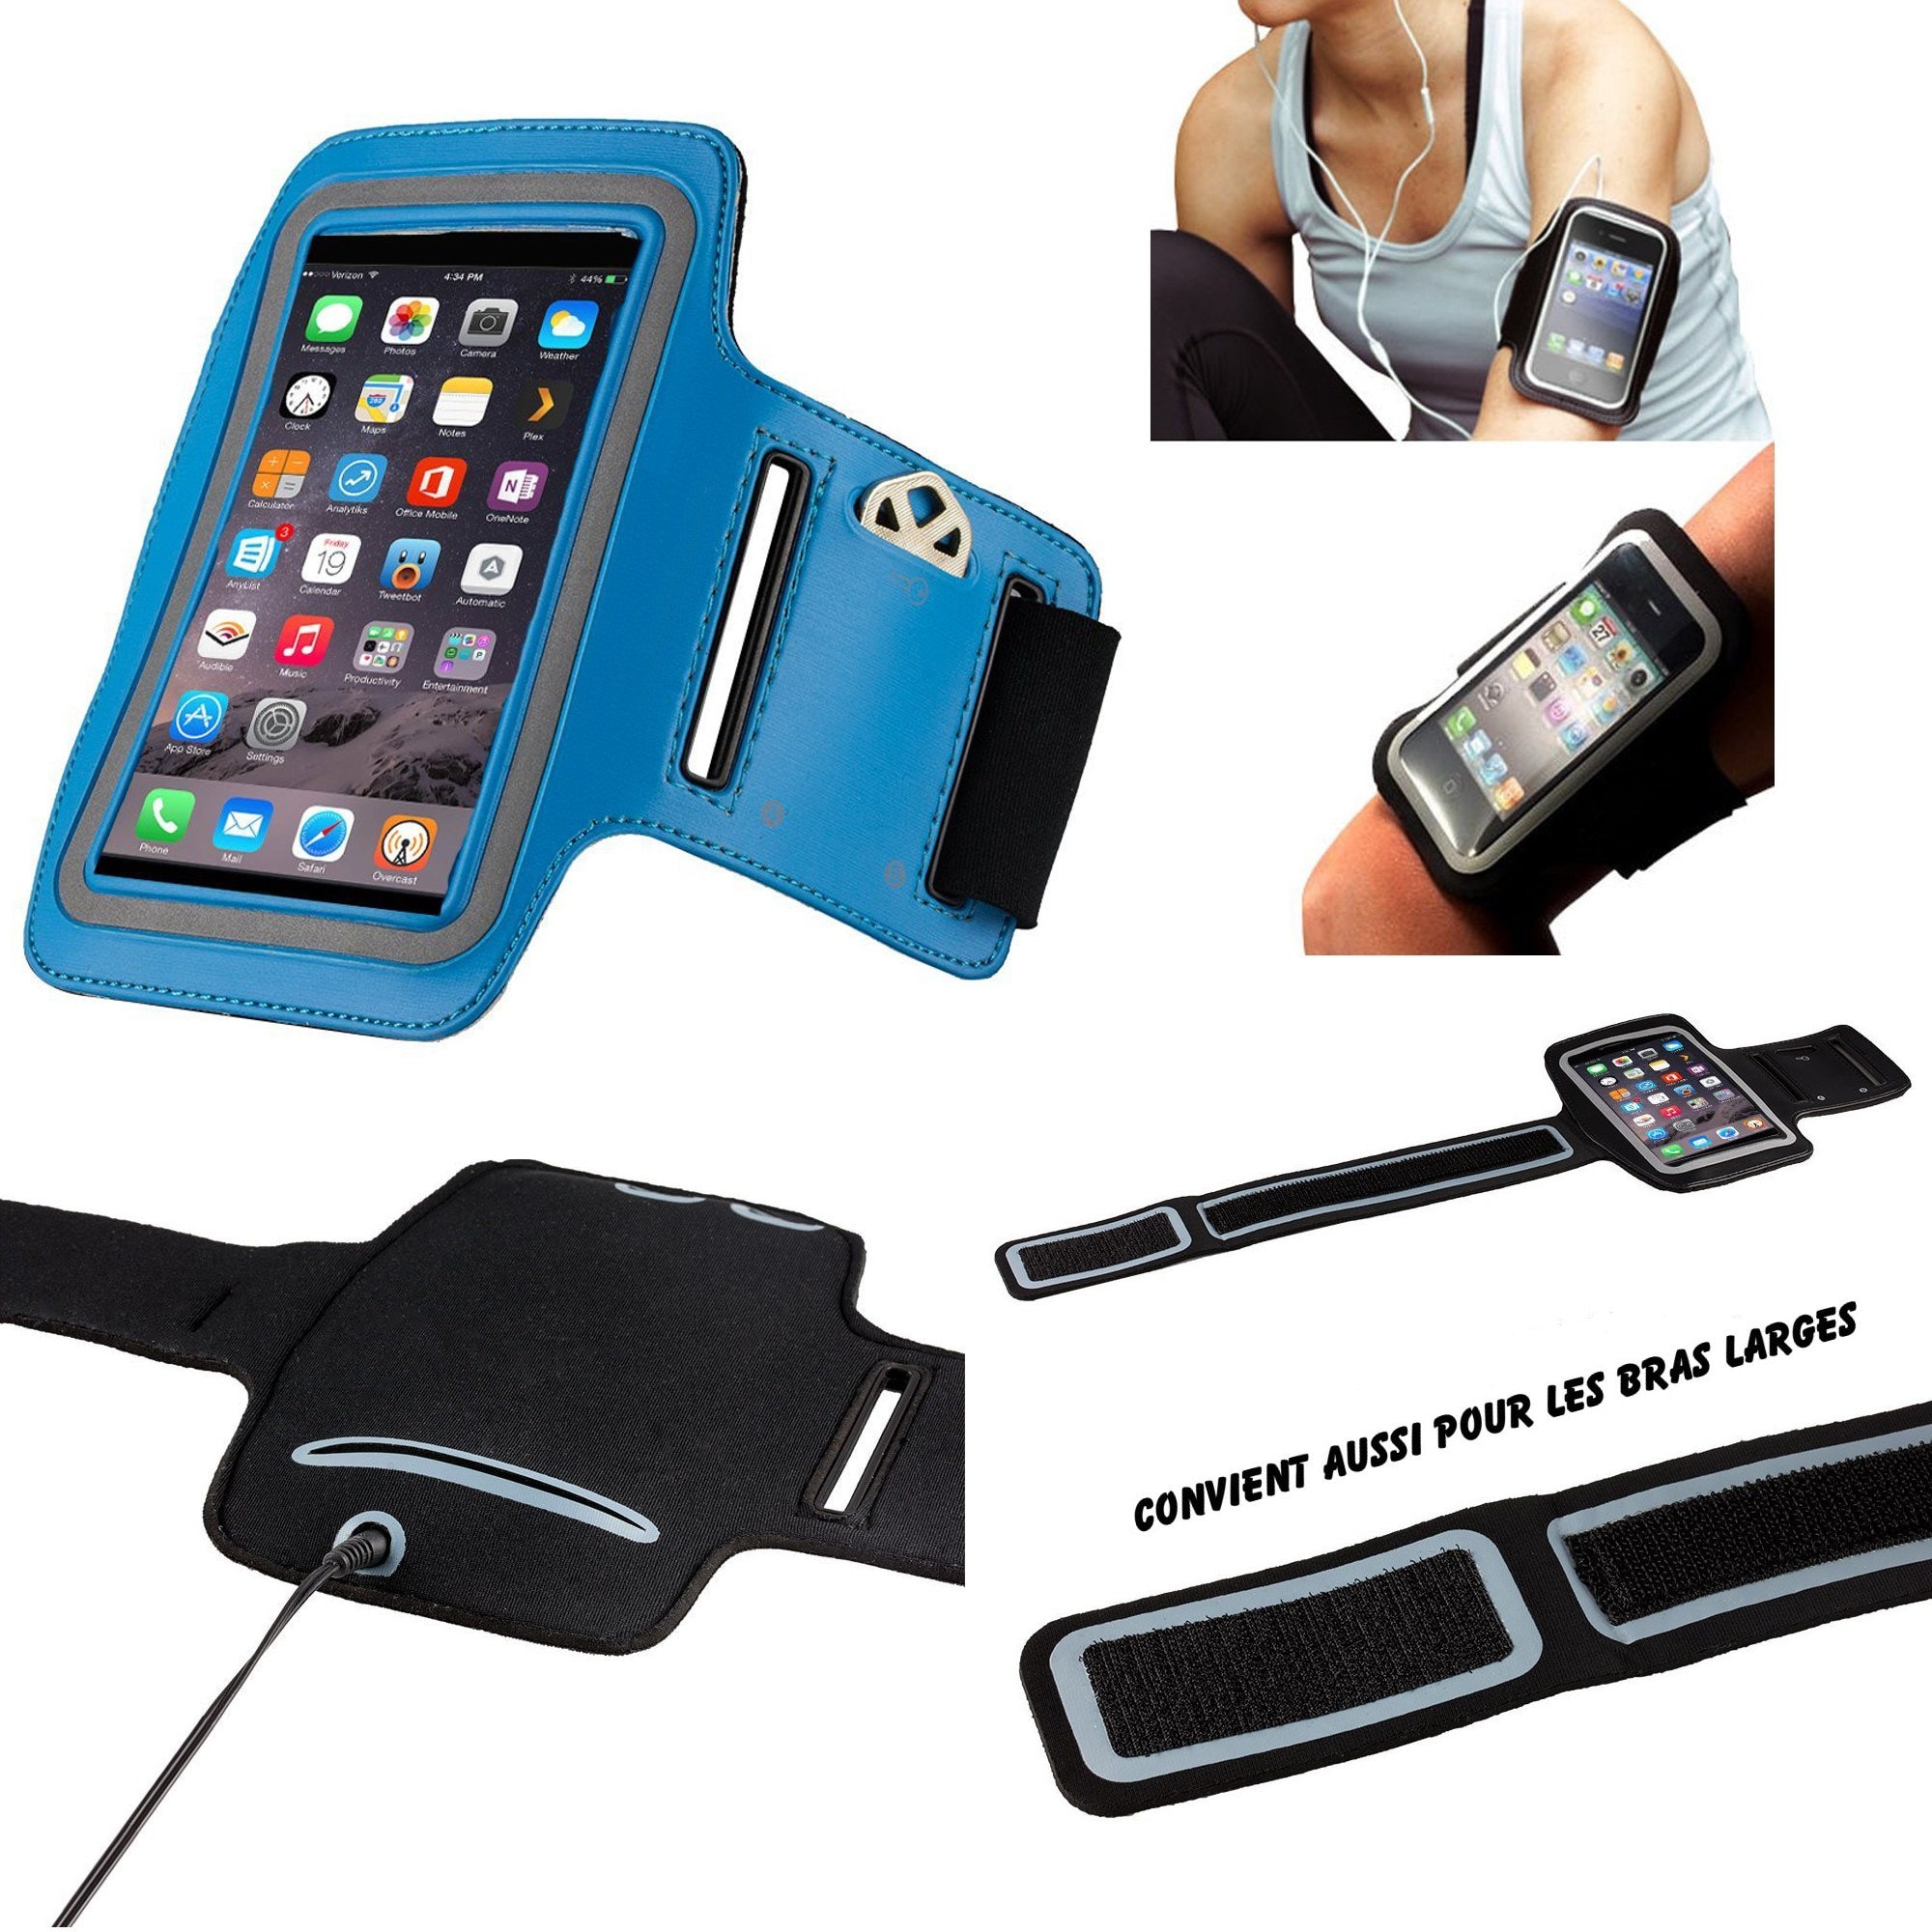 Huawei 6x Brassard Sport Neoprene pour telephone portable (Smartphone)  Course A Pied Randonnée Running Scratch Reglable - Activite Sportive - Bleu  MP-FRANCE Pas Cher 